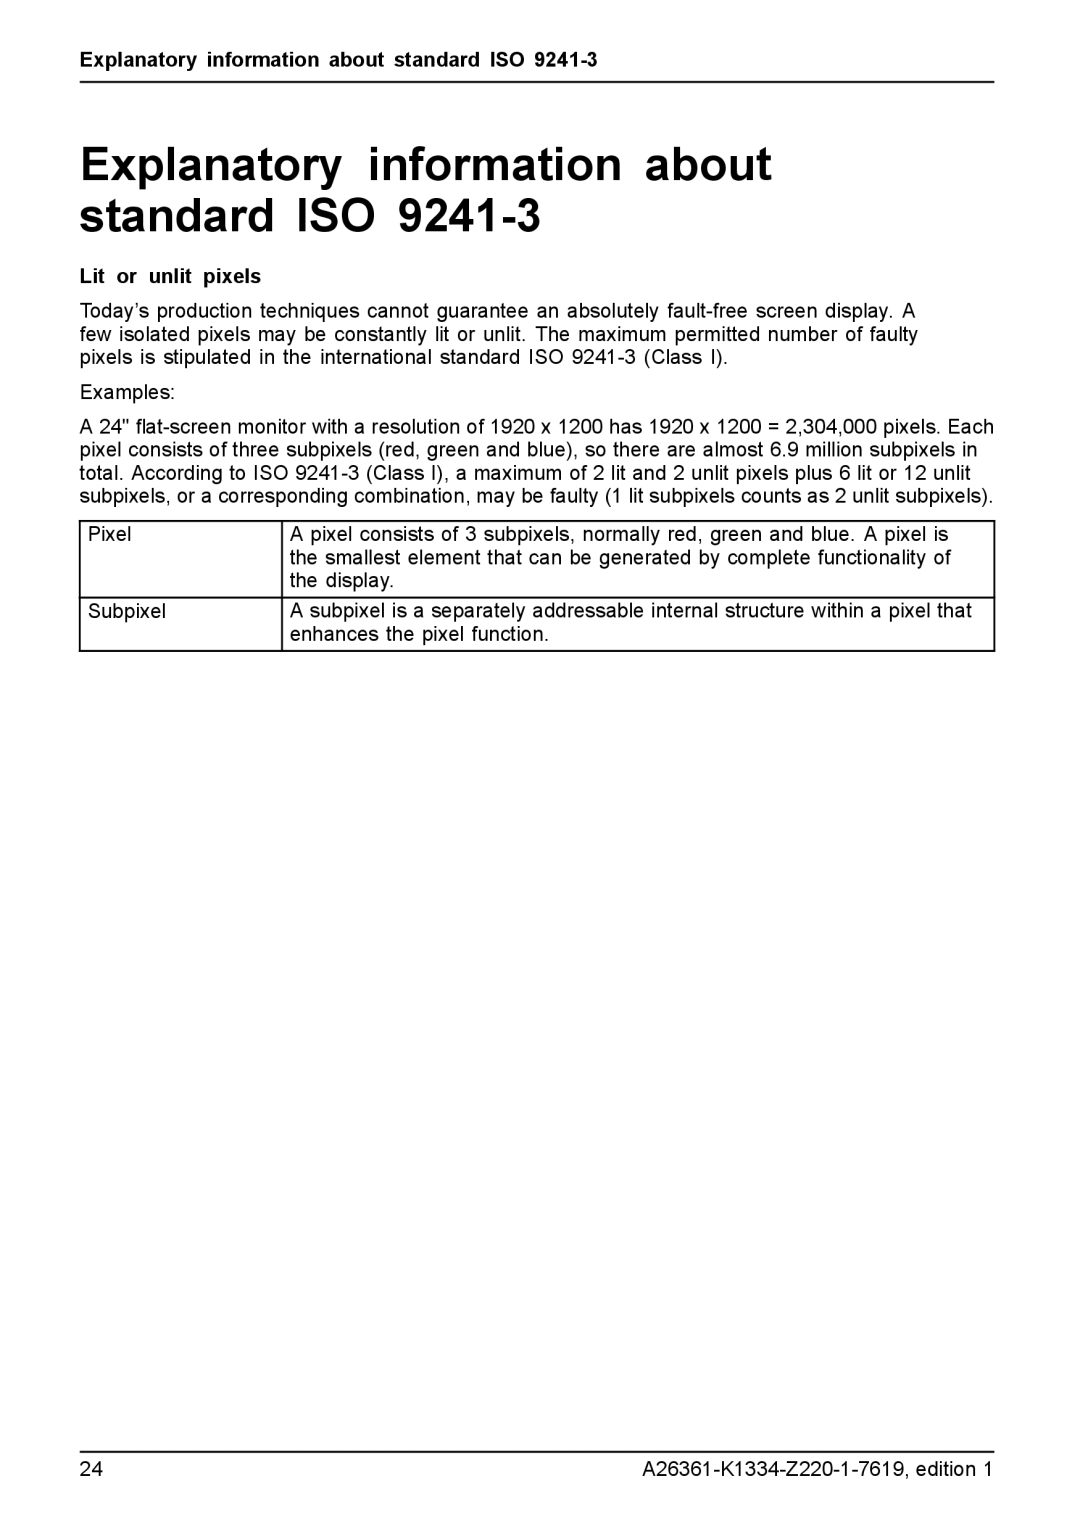 Fujitsu B24W-5 manual Explanatory information about standard ISO, Lit or unlit pixels 